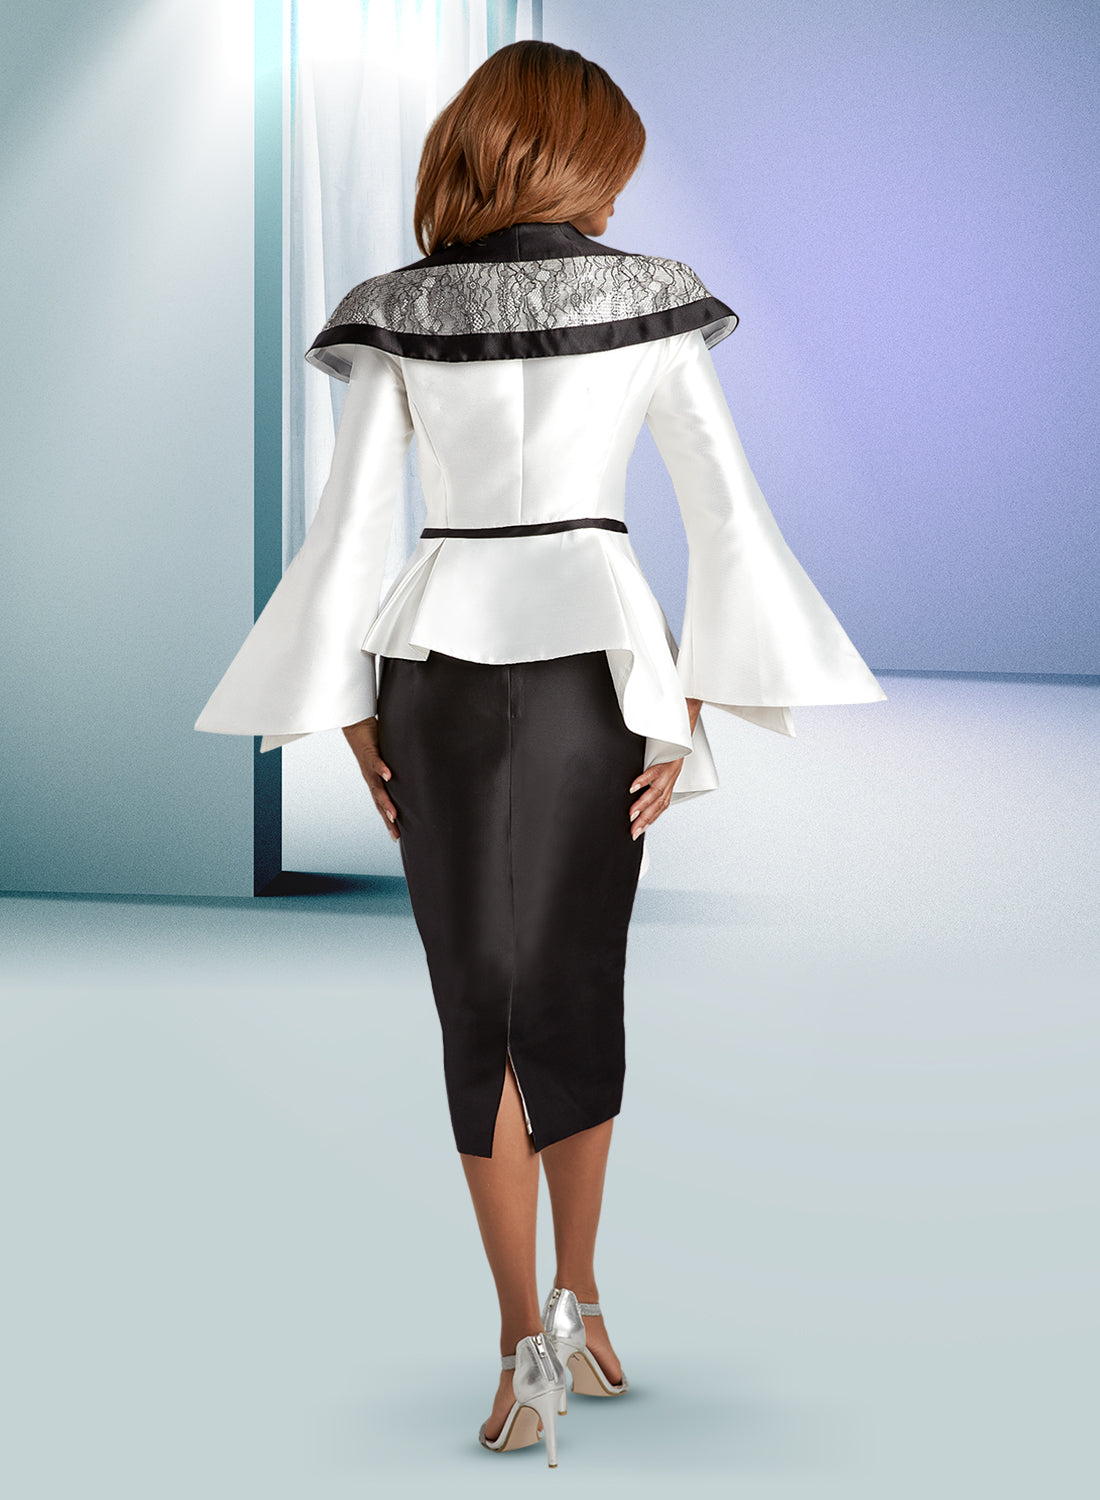 Donna Vinci 12080 - White Black - Rhinestone Button Skirt Suit